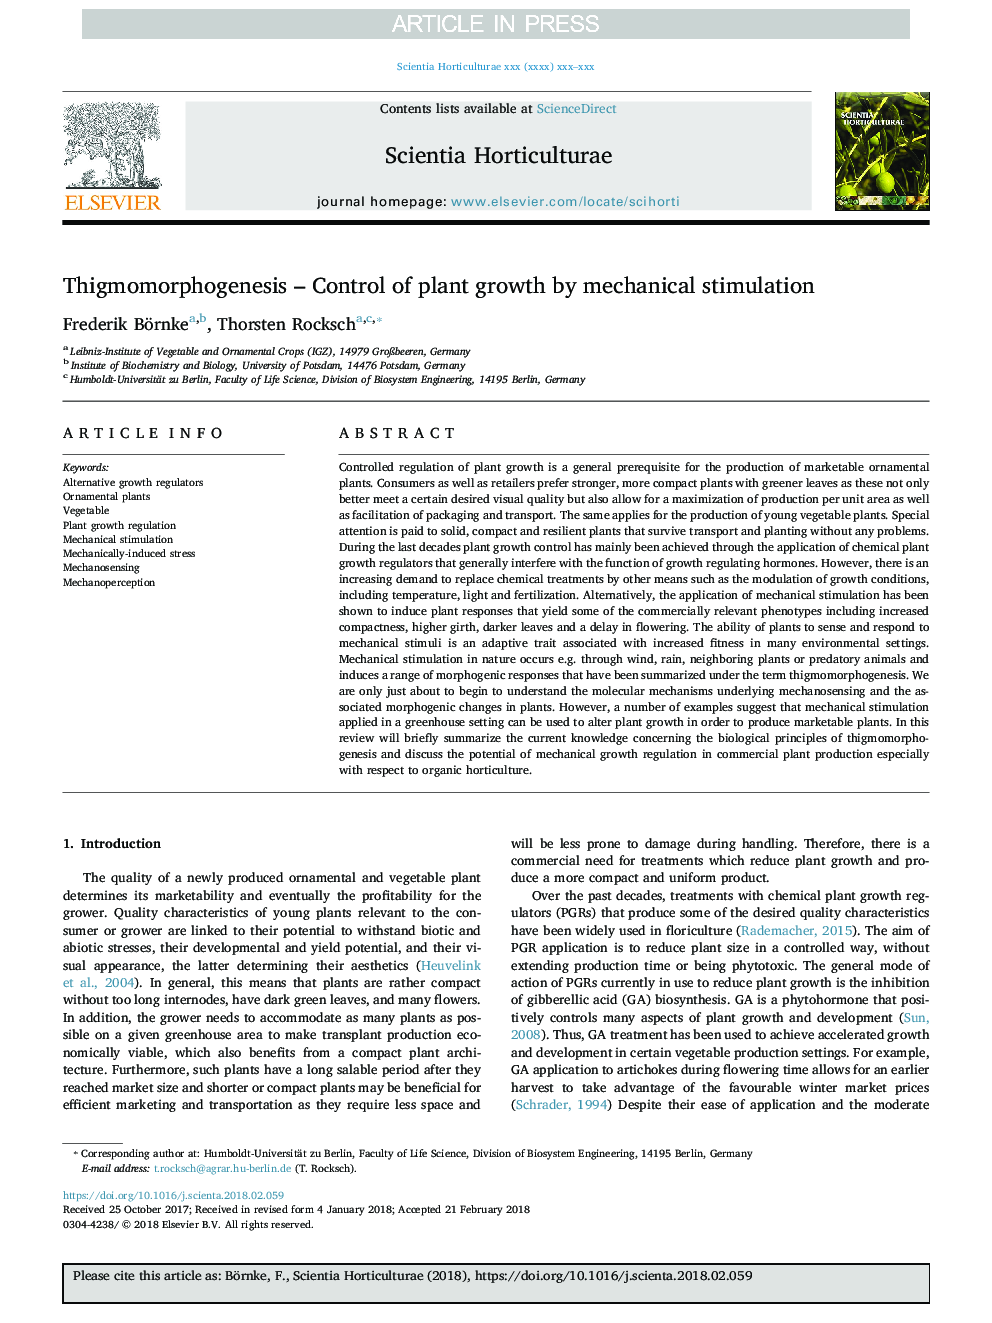 Thigmomorphogenesis - Control of plant growth by mechanical stimulation